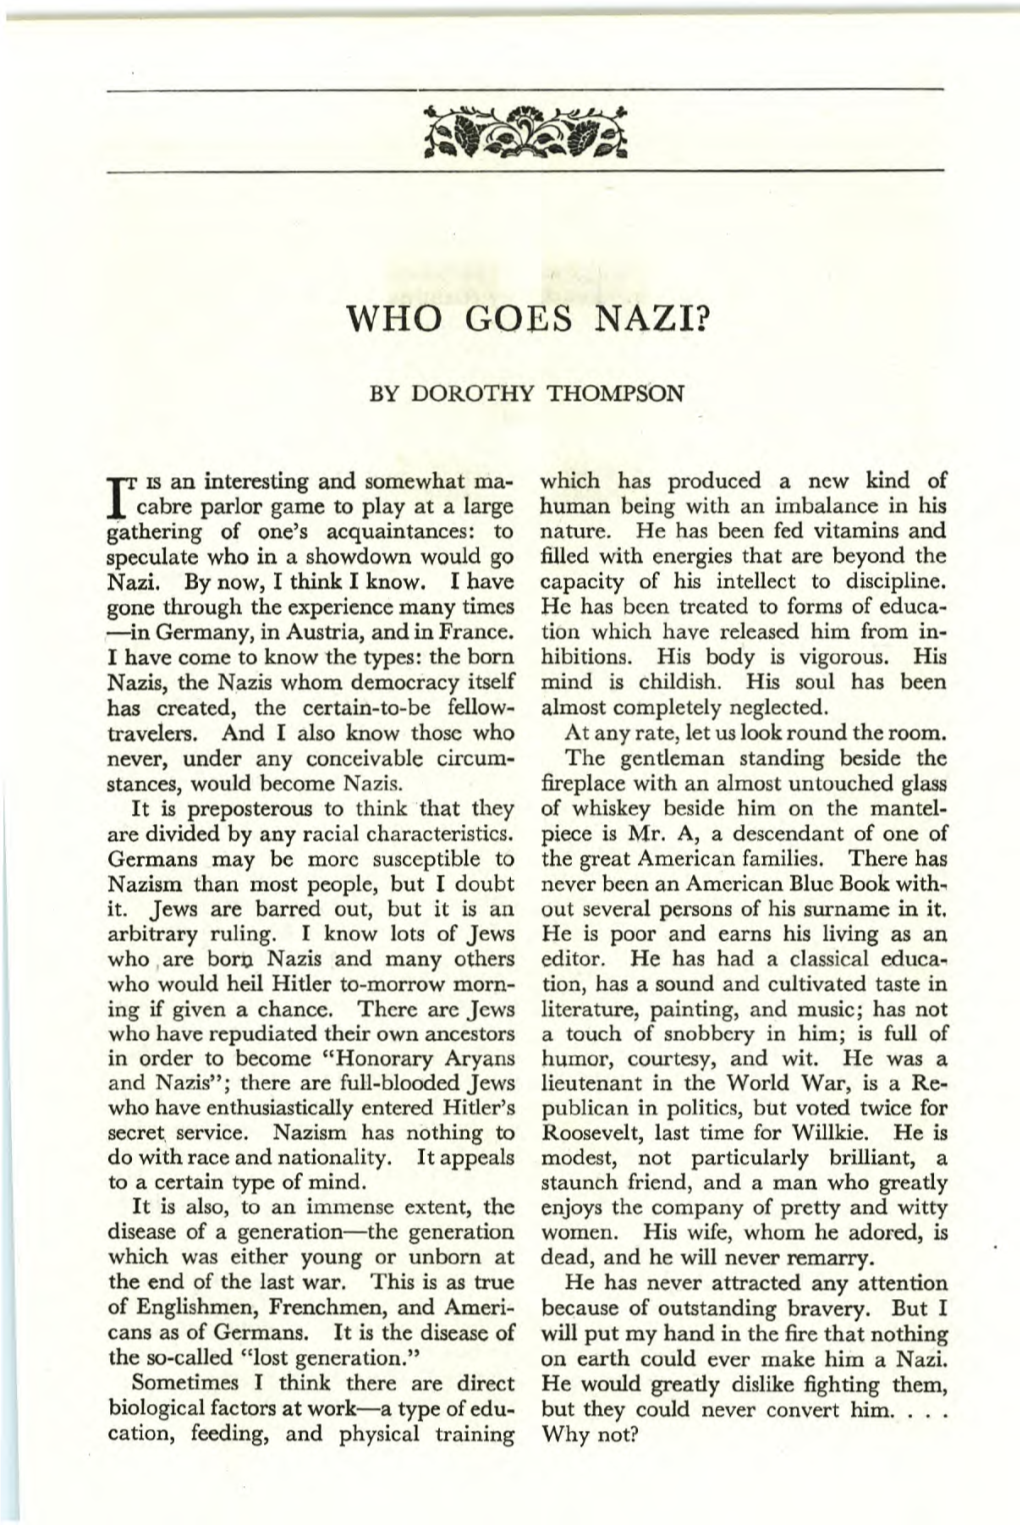 Who Goes Nazi?